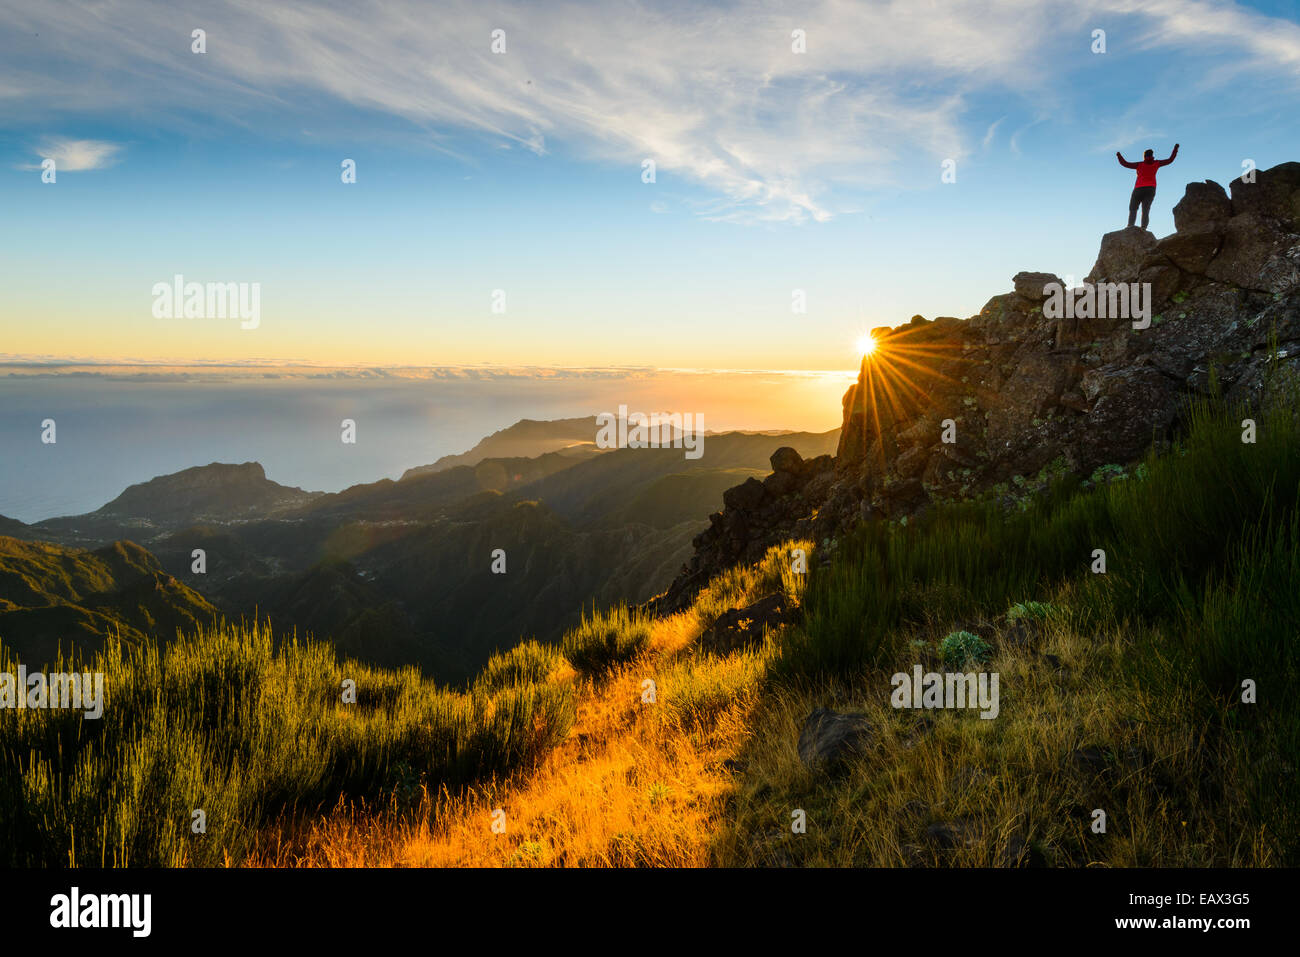 Hiker with arms raised atop a mountain at sunrise, Pico do Arieiro, Madeira Stock Photo